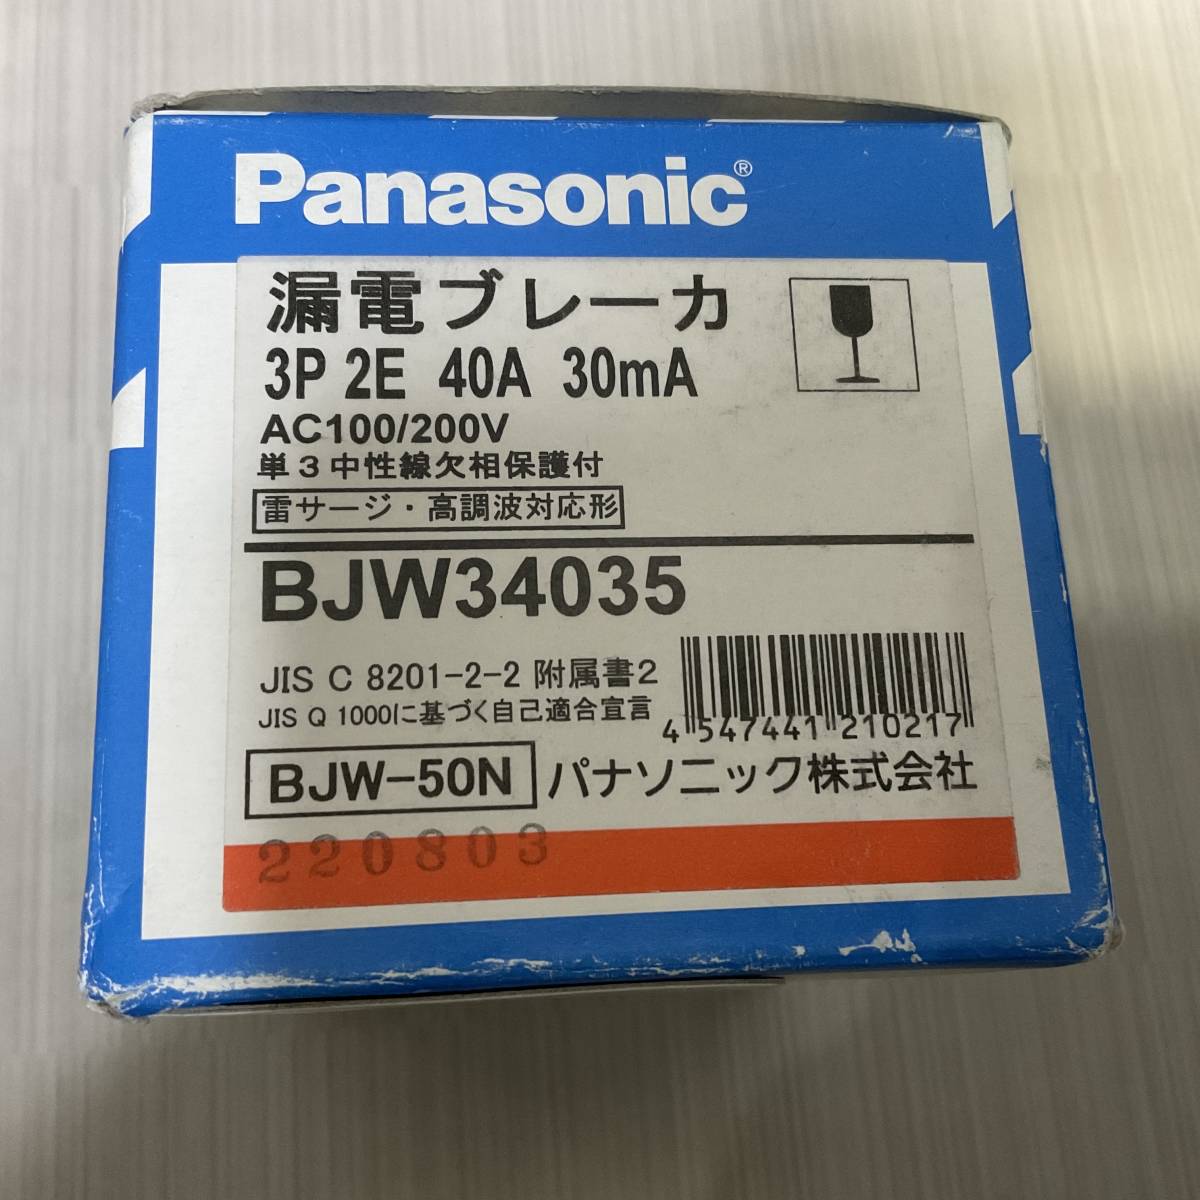 BJW34035 漏電ブレーカ 3P 2E 40A 30mA 2022年製 パナソニック(Panasonic) 未開封自宅保管品_画像6